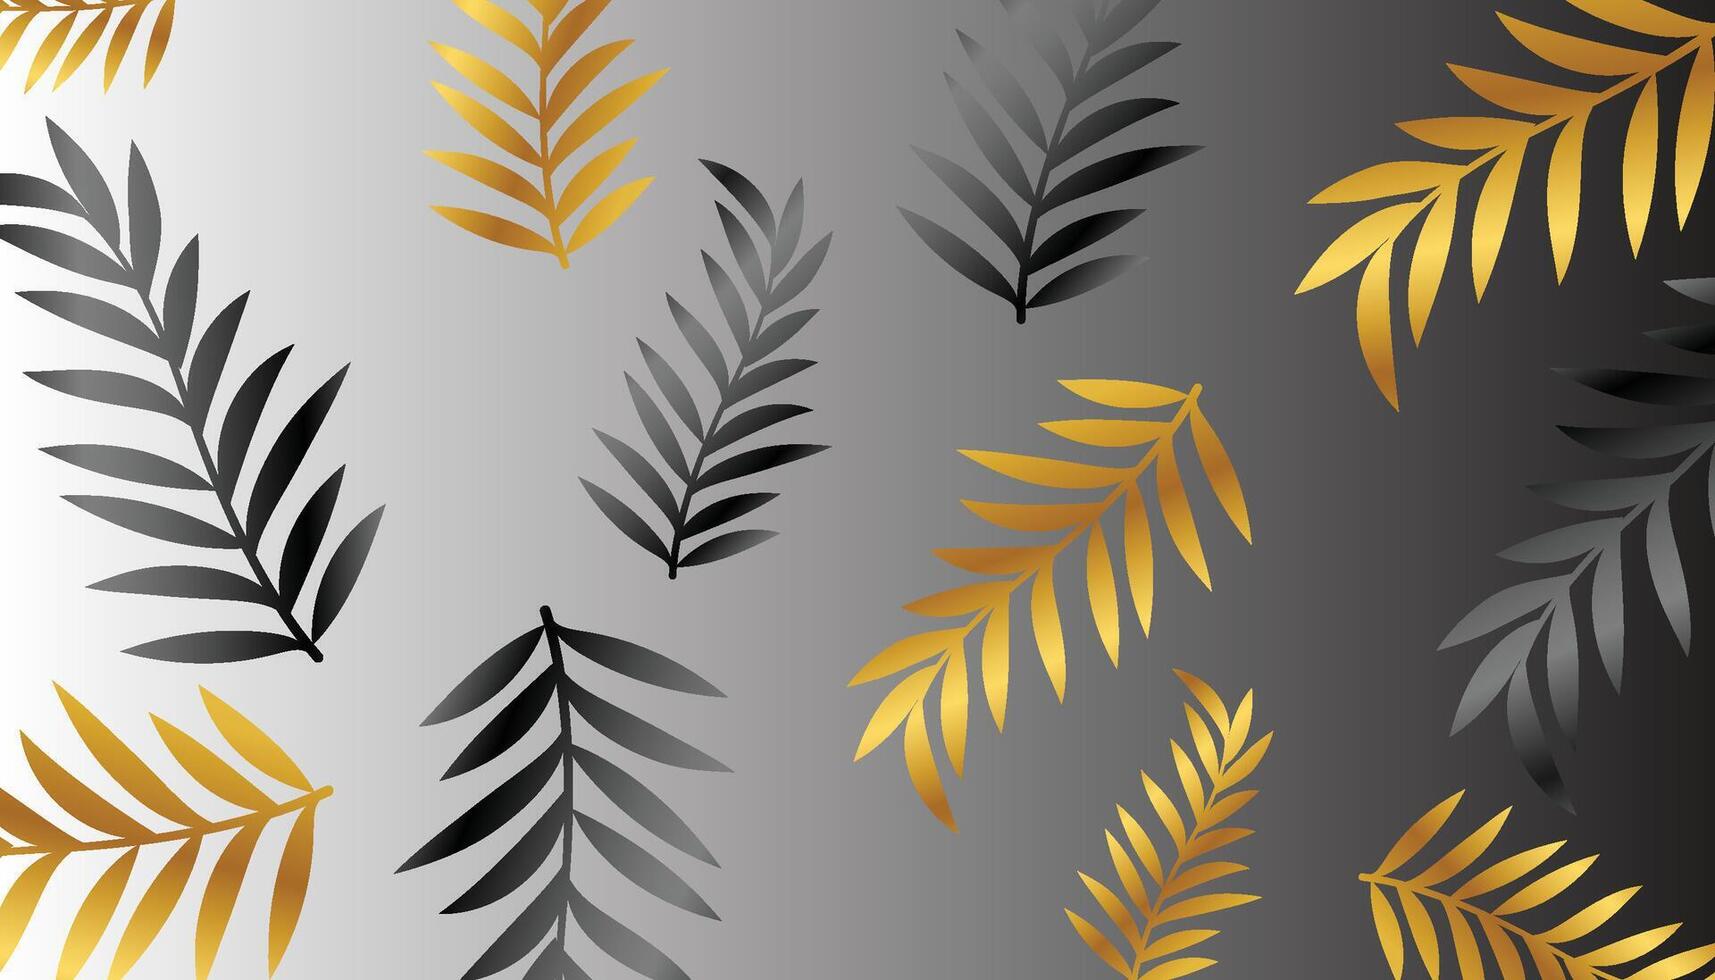 svart och gyllene tropisk löv på mörk bakgrund. lyx exotisk botanisk design. vägg konst design. vektor illustration.